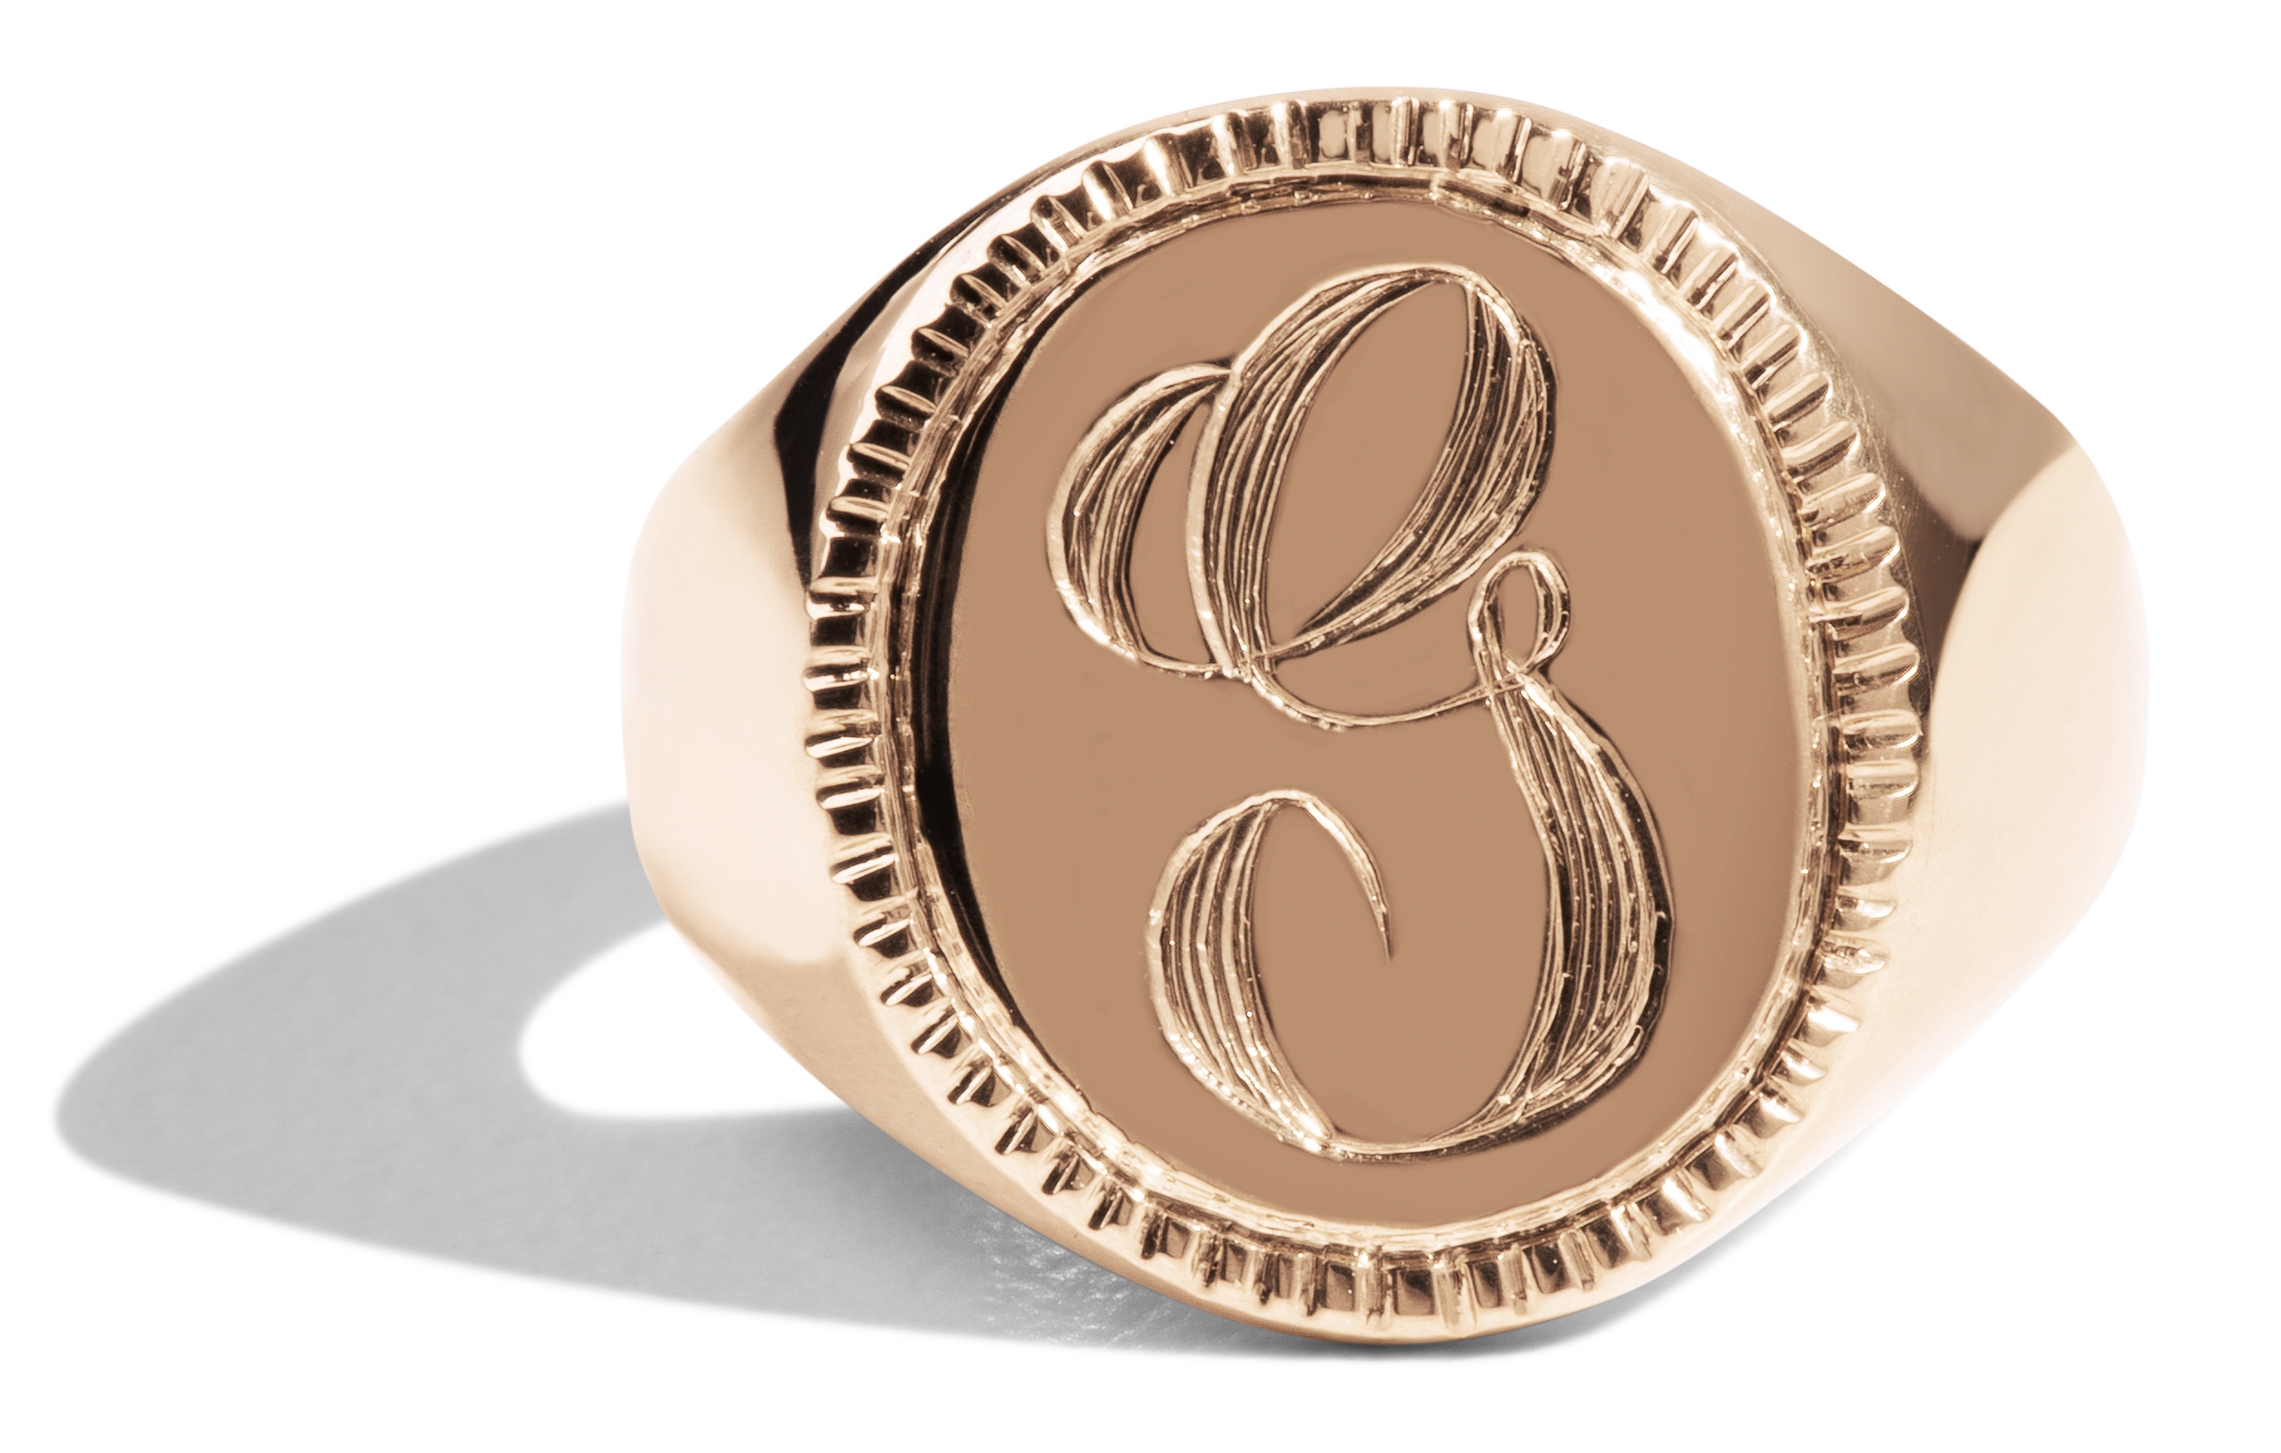 14K Monogram Signet Ring 7 | Cuffed by Nano